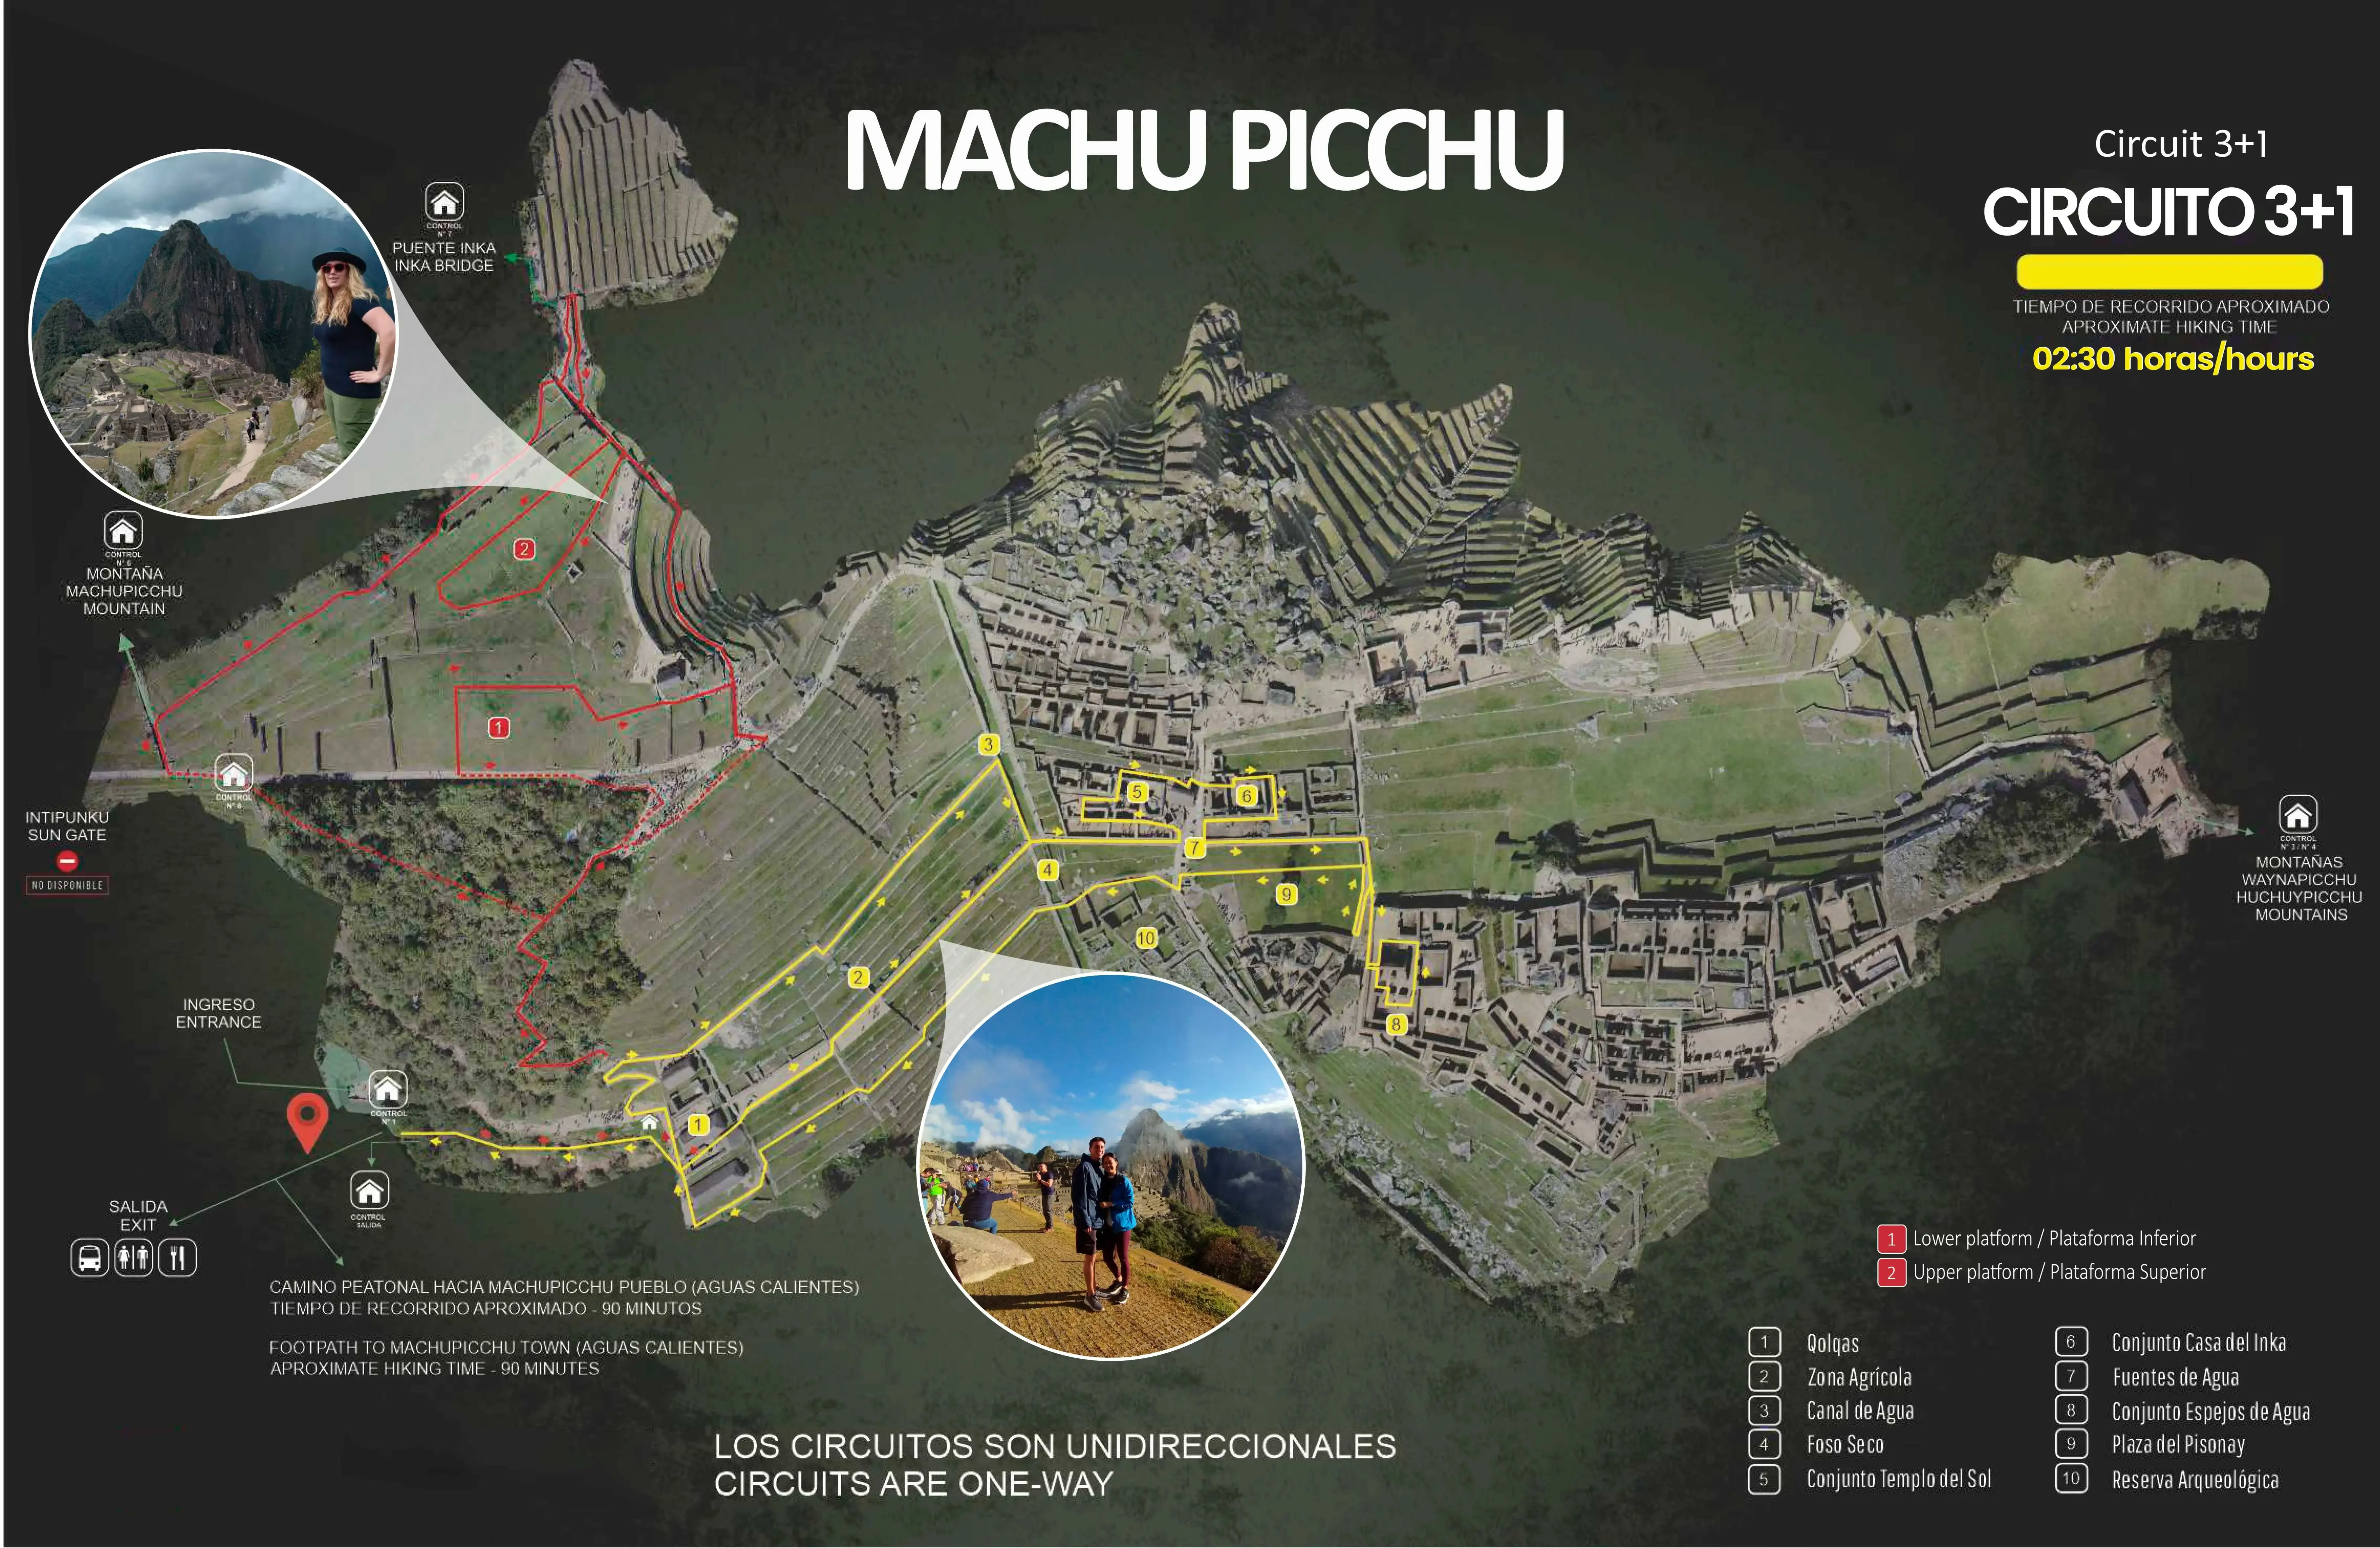 Chachabamba - Inca Trail to Machu Picchu